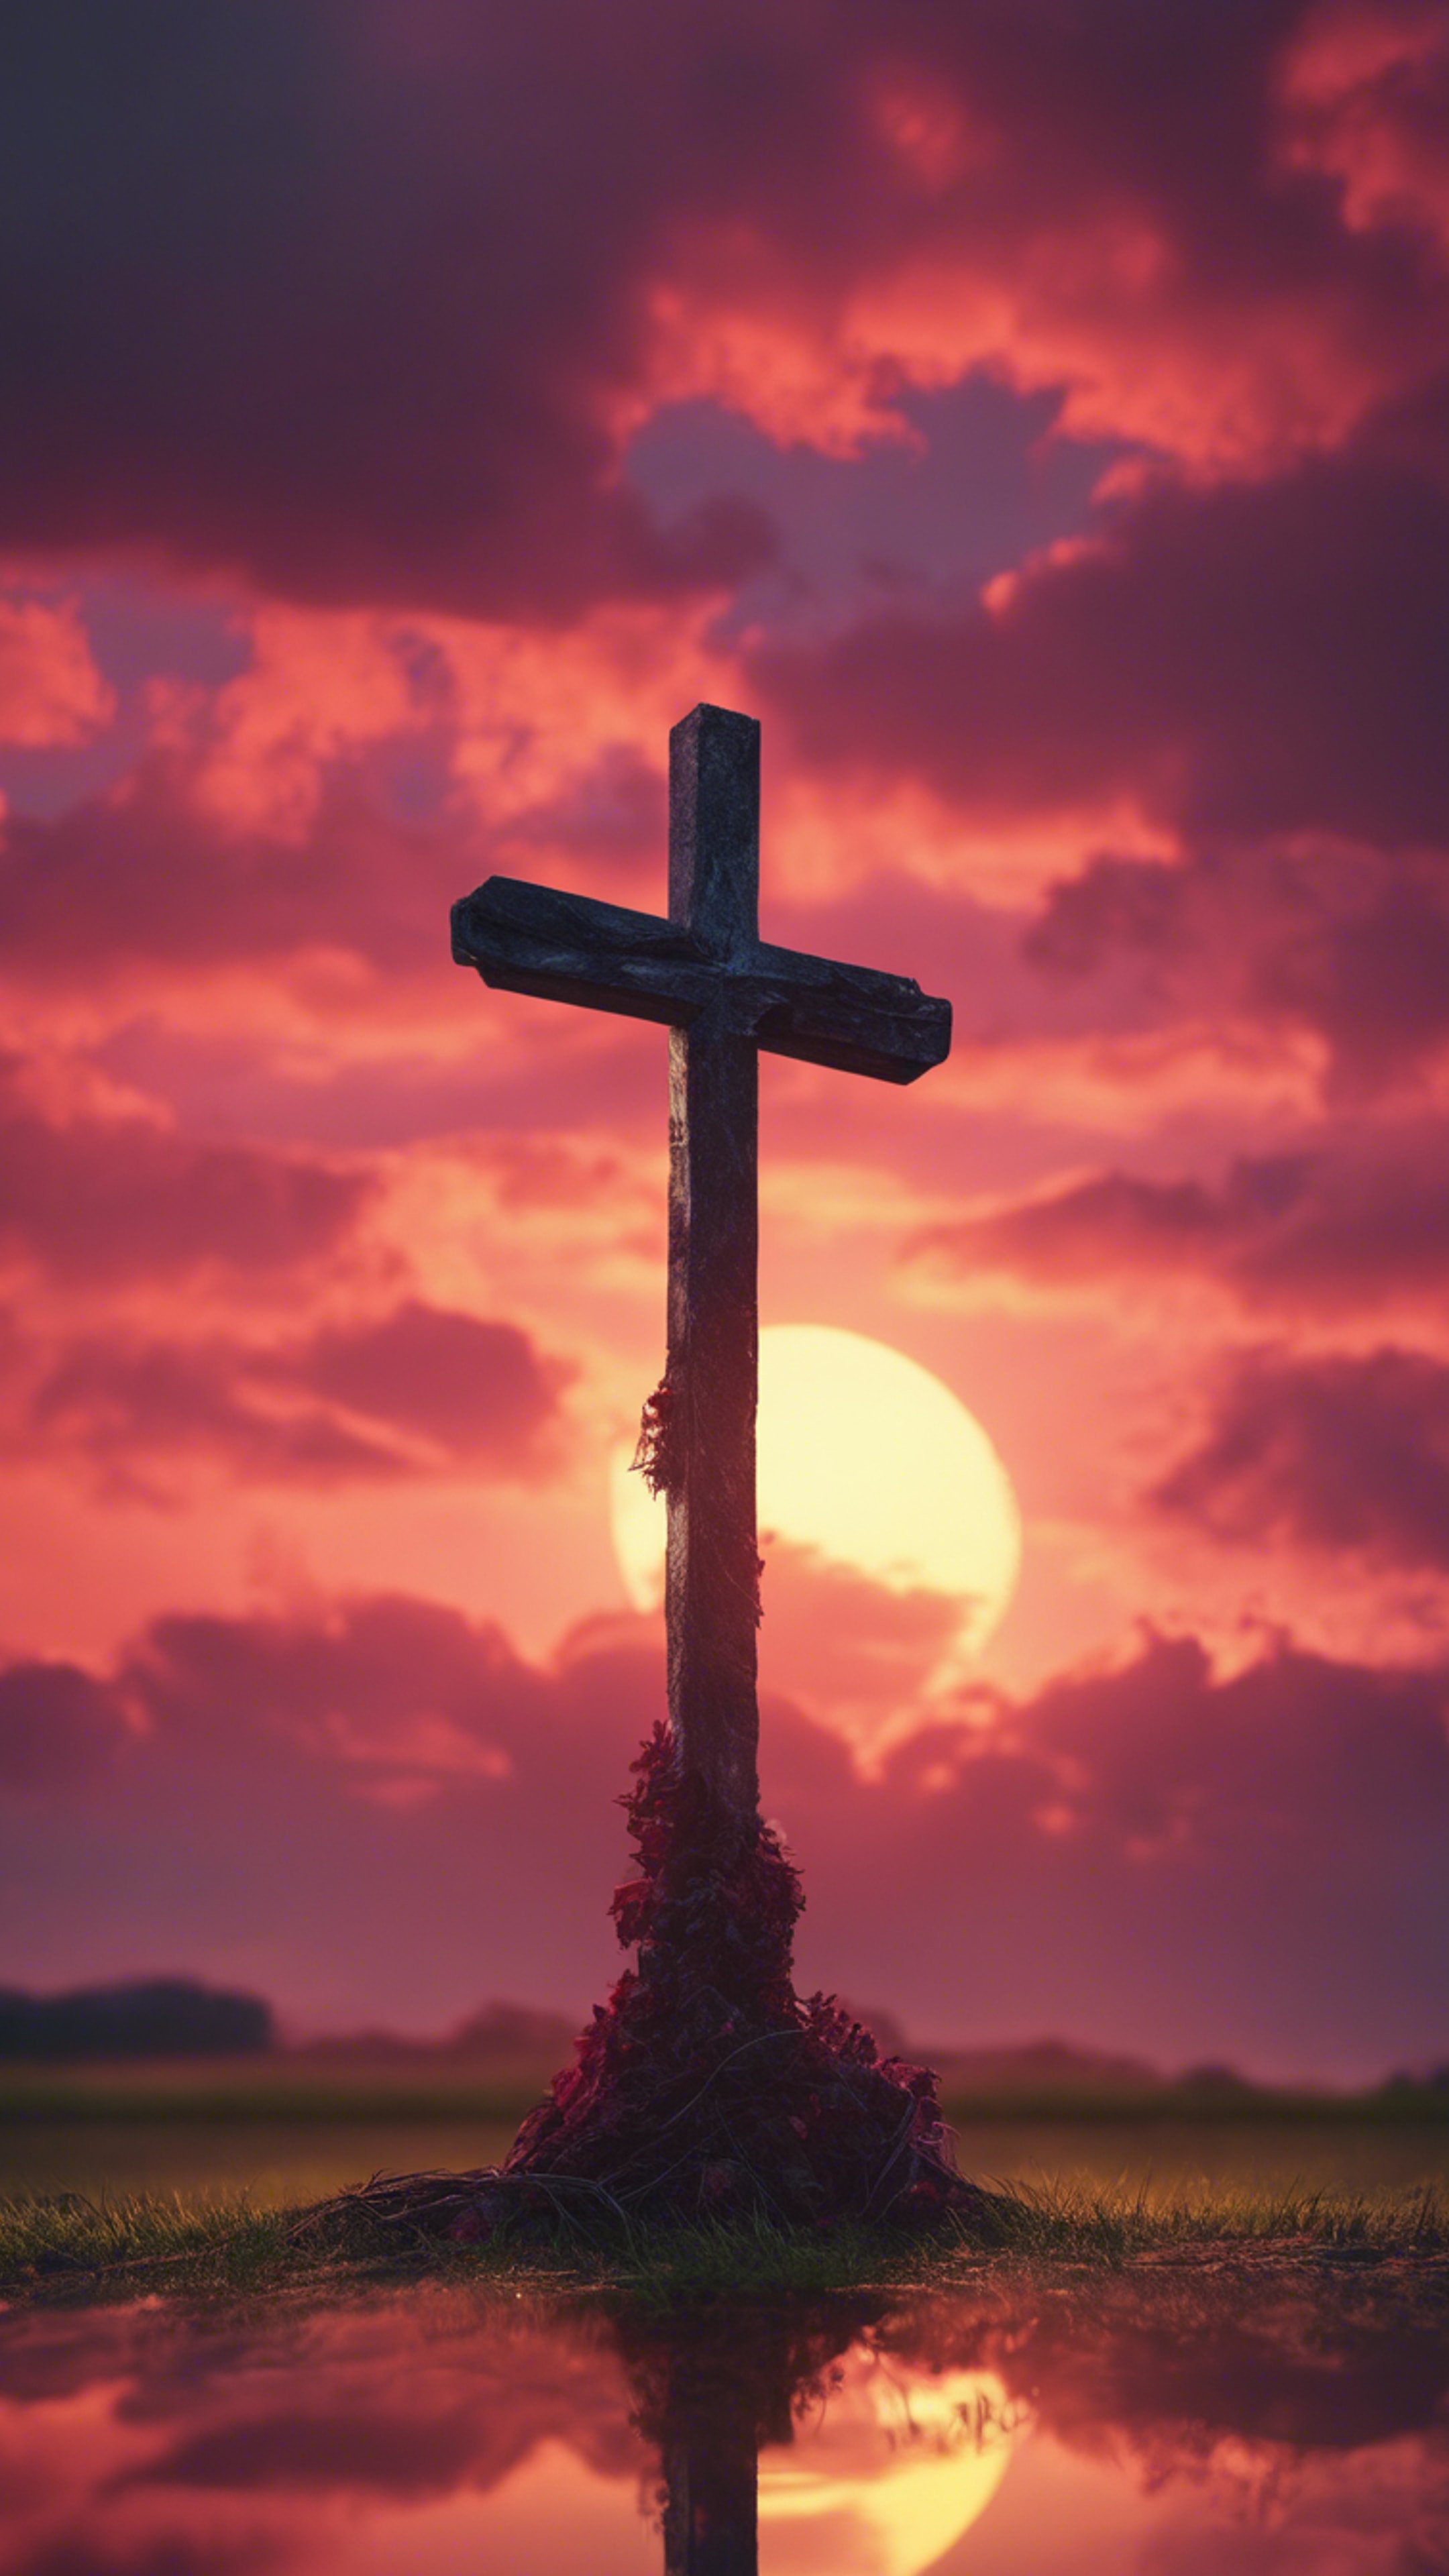 A cross standing against the crimson colors of a sunset sky. Обои[b41808c7967b41aa9e40]